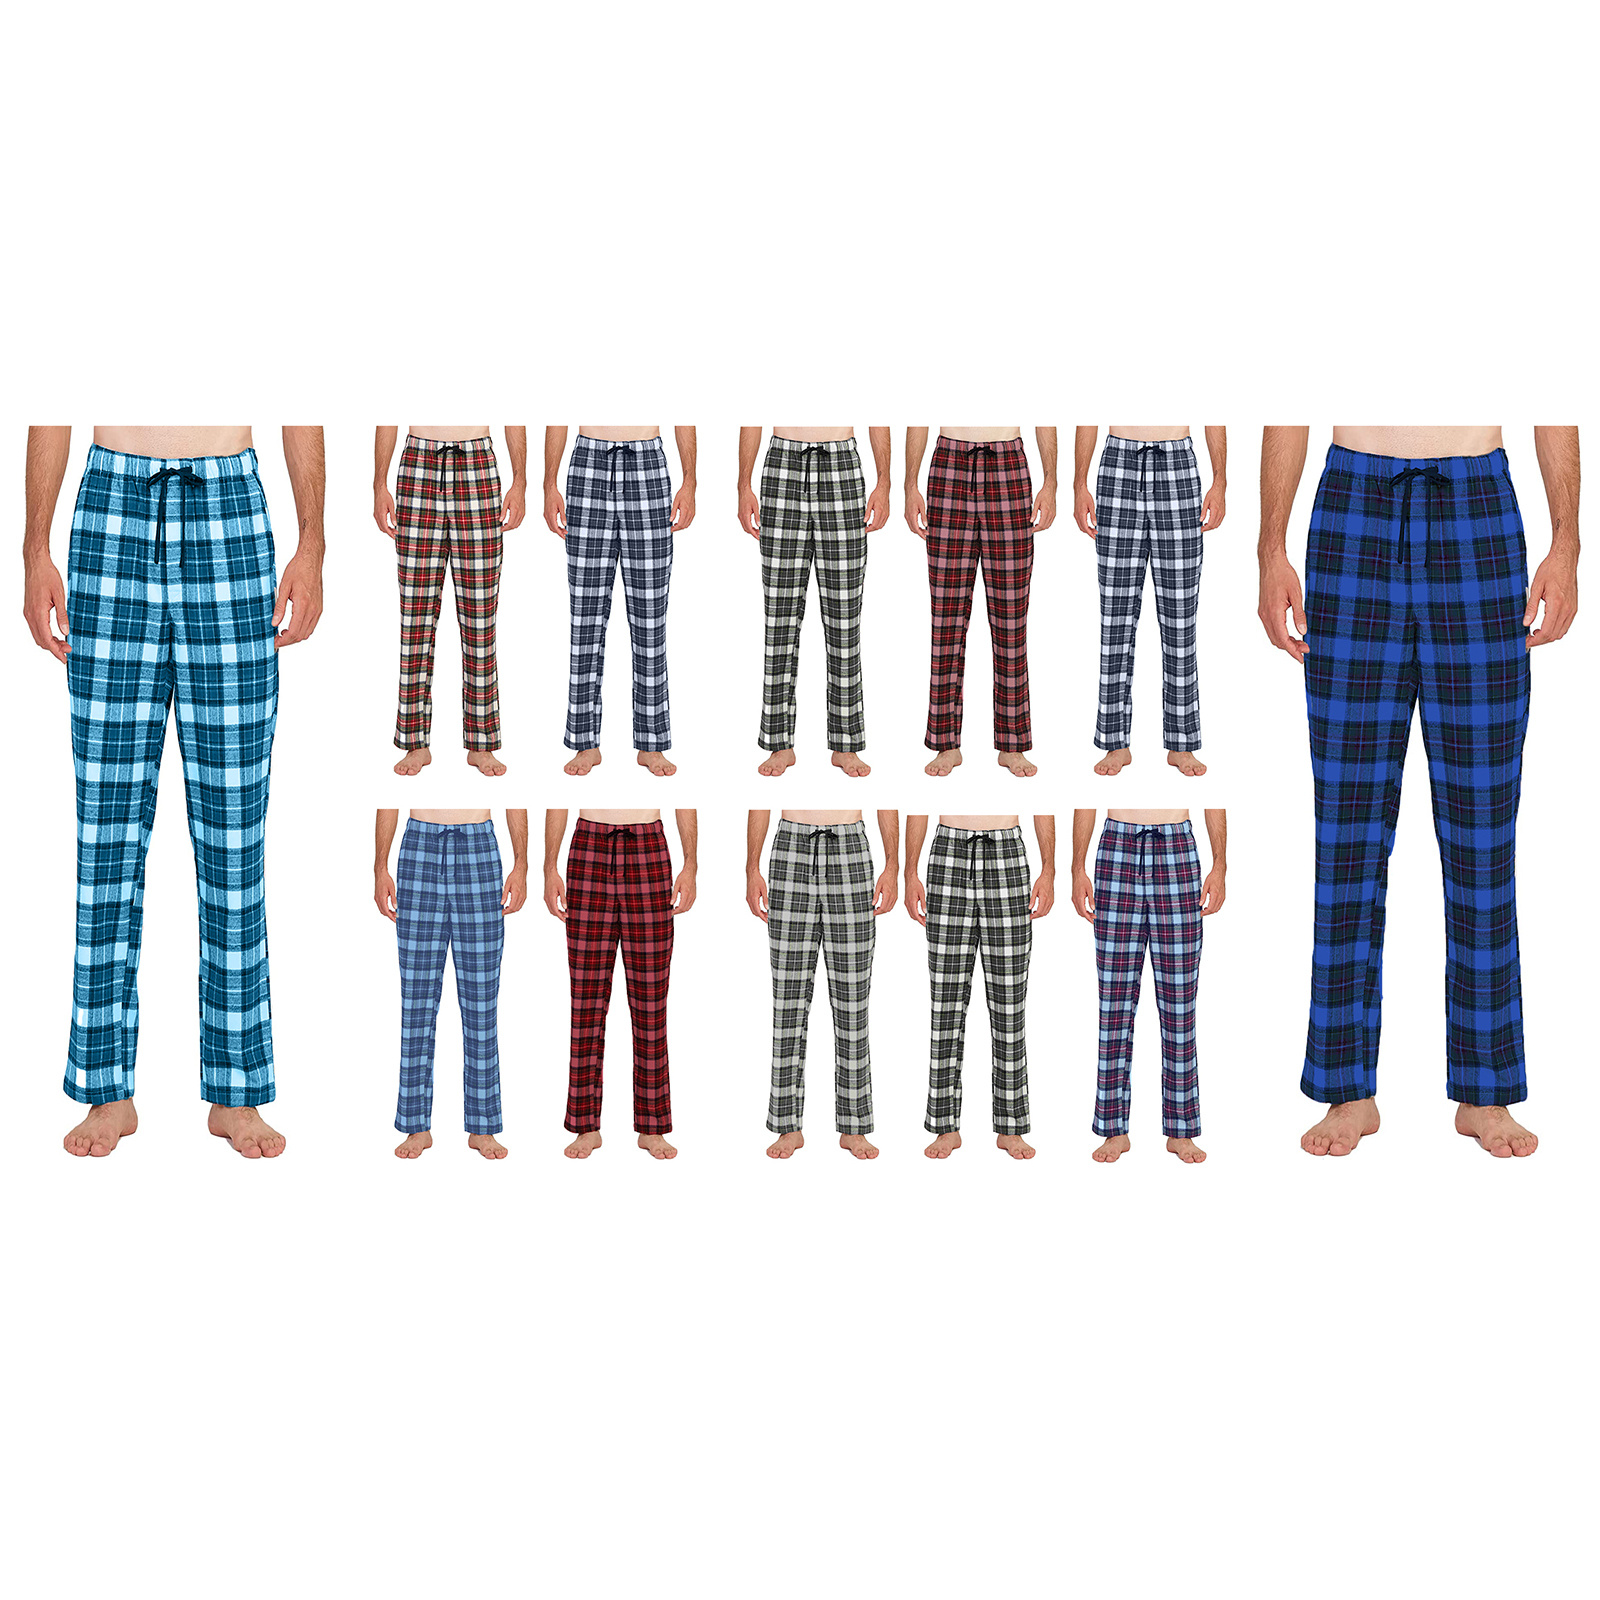 Men's Soft 100% Cotton Flannel Plaid Lounge Pajama Sleep Pants - 1-Pack, Large